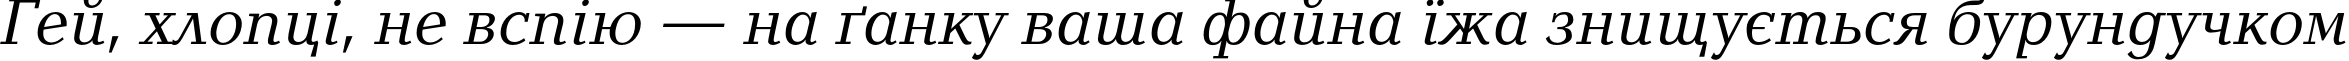 Пример написания шрифтом BalticaC Italic текста на украинском